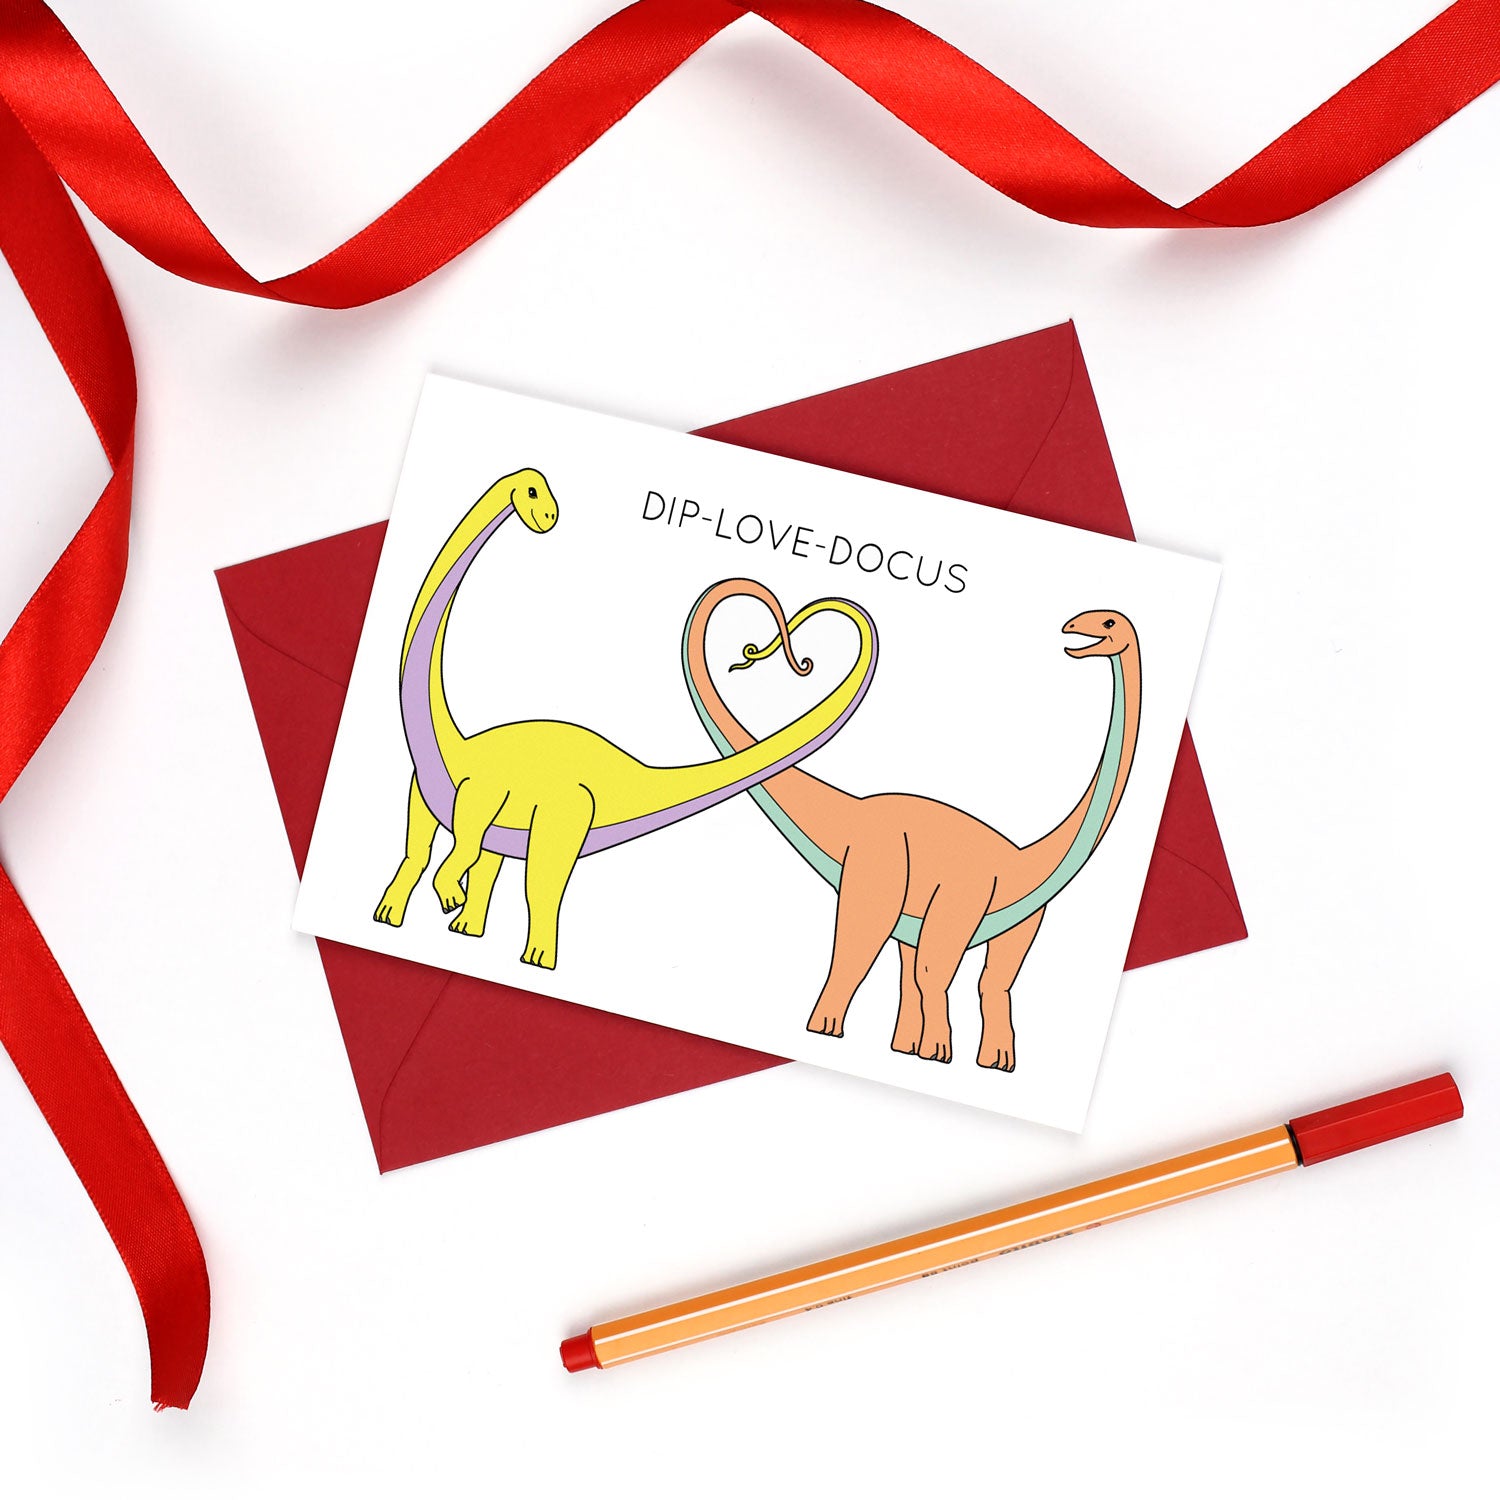 Dip-love-docus Dinosaur Valentine's Day Greeting Card